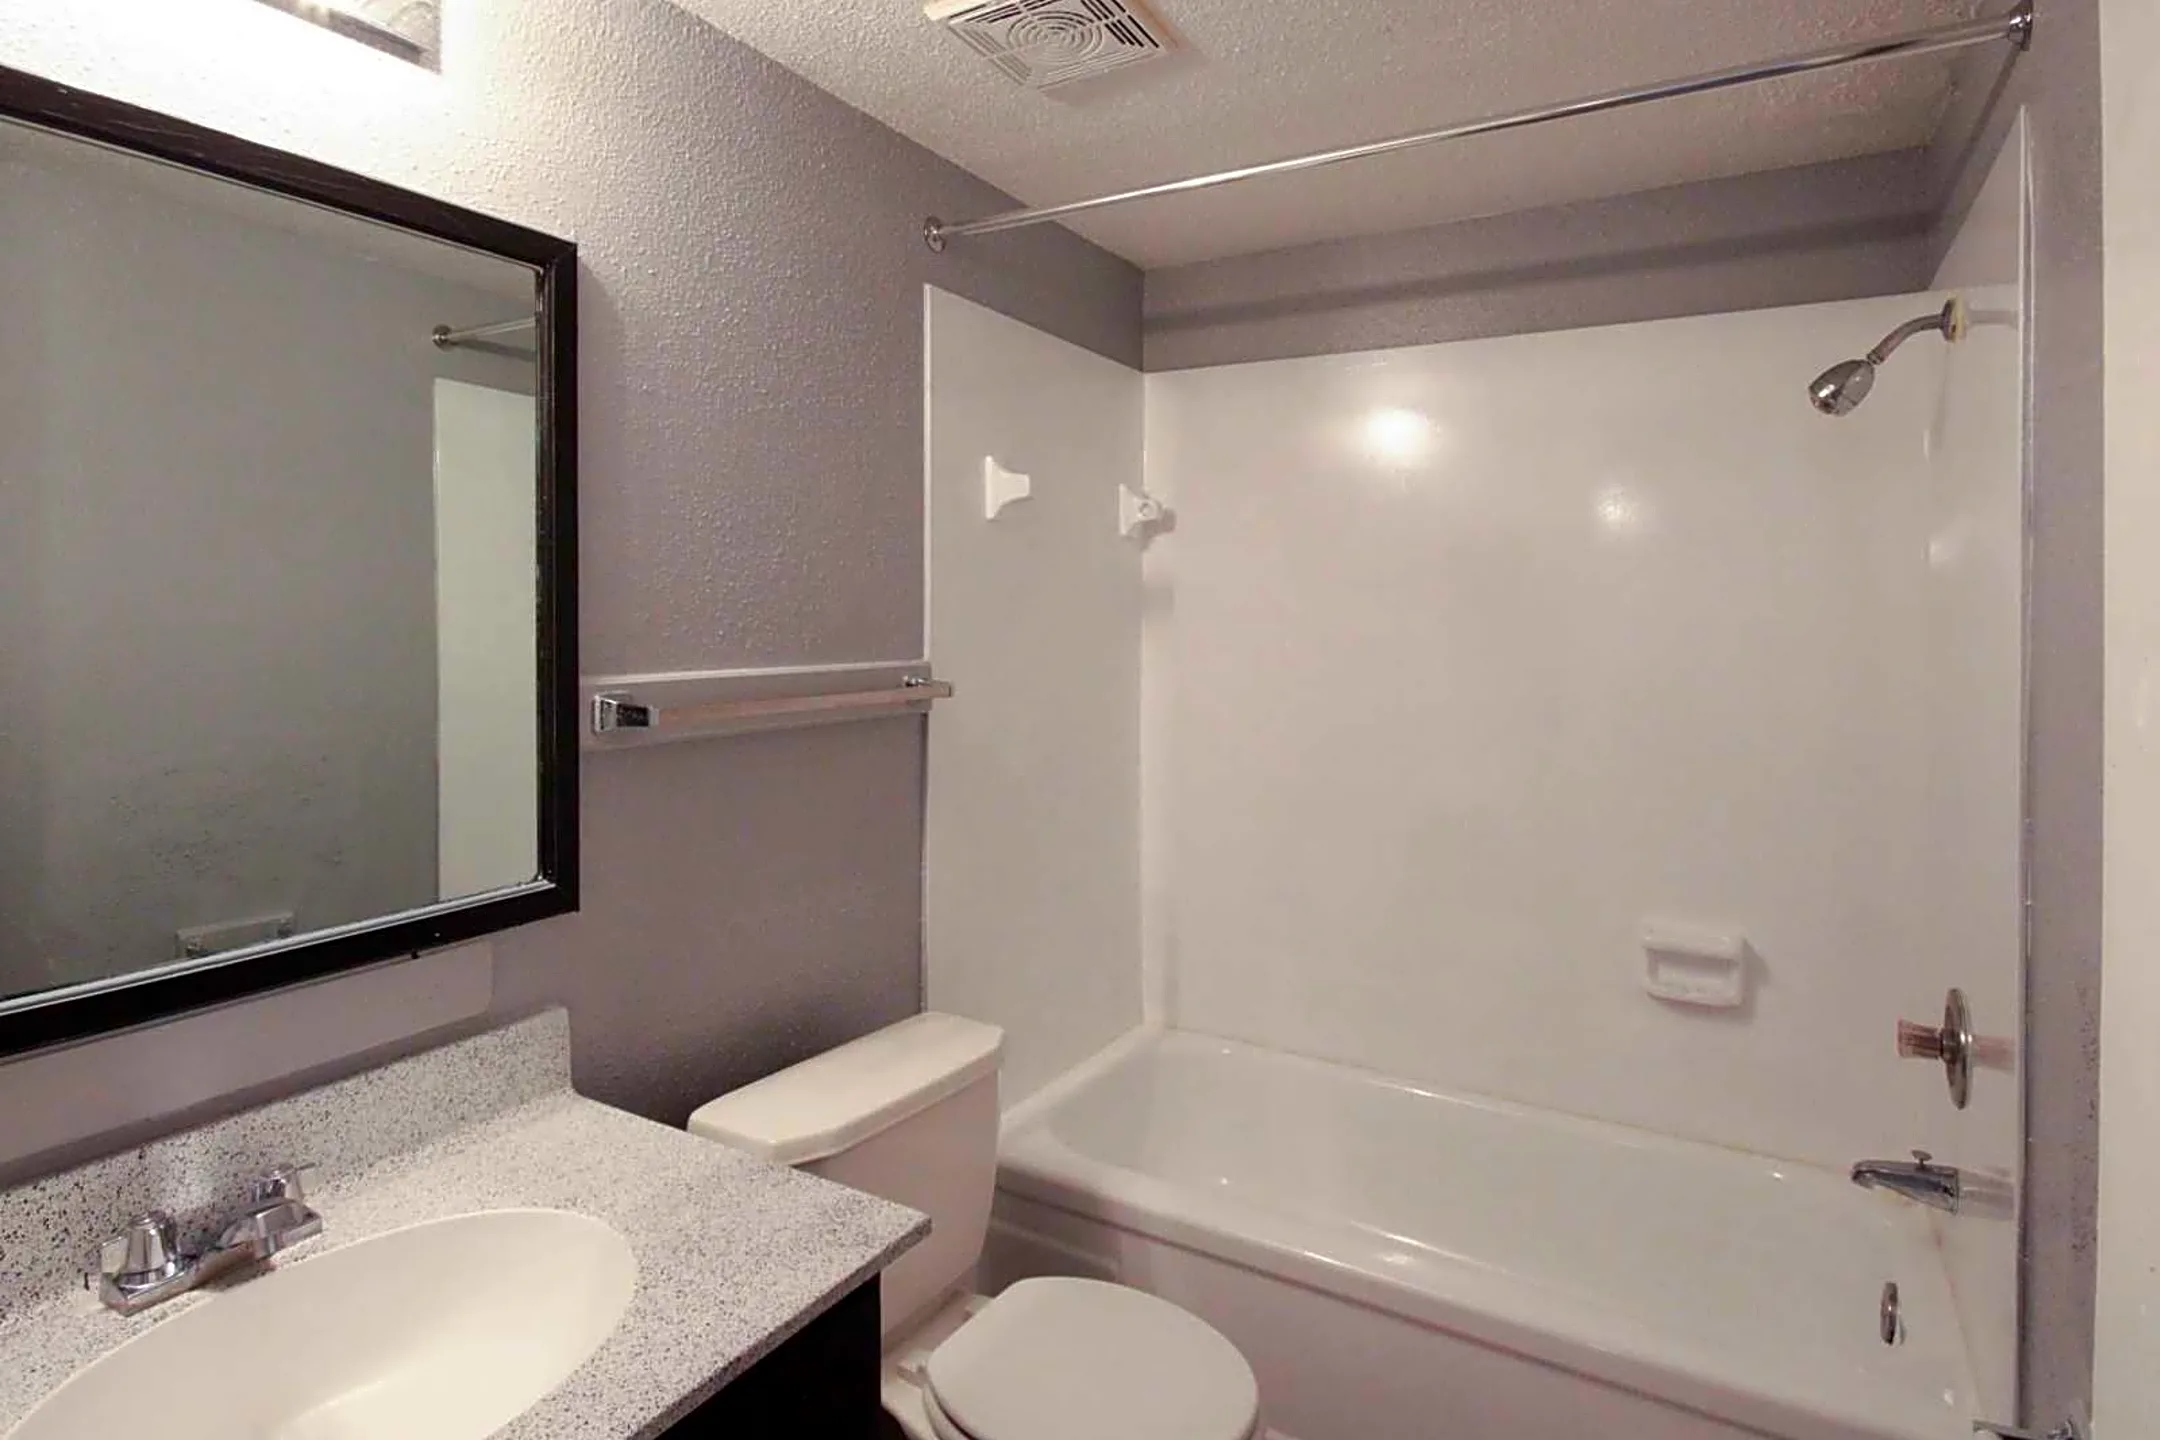 Bathroom - Port Arthur Park Apartments - Port Arthur, TX